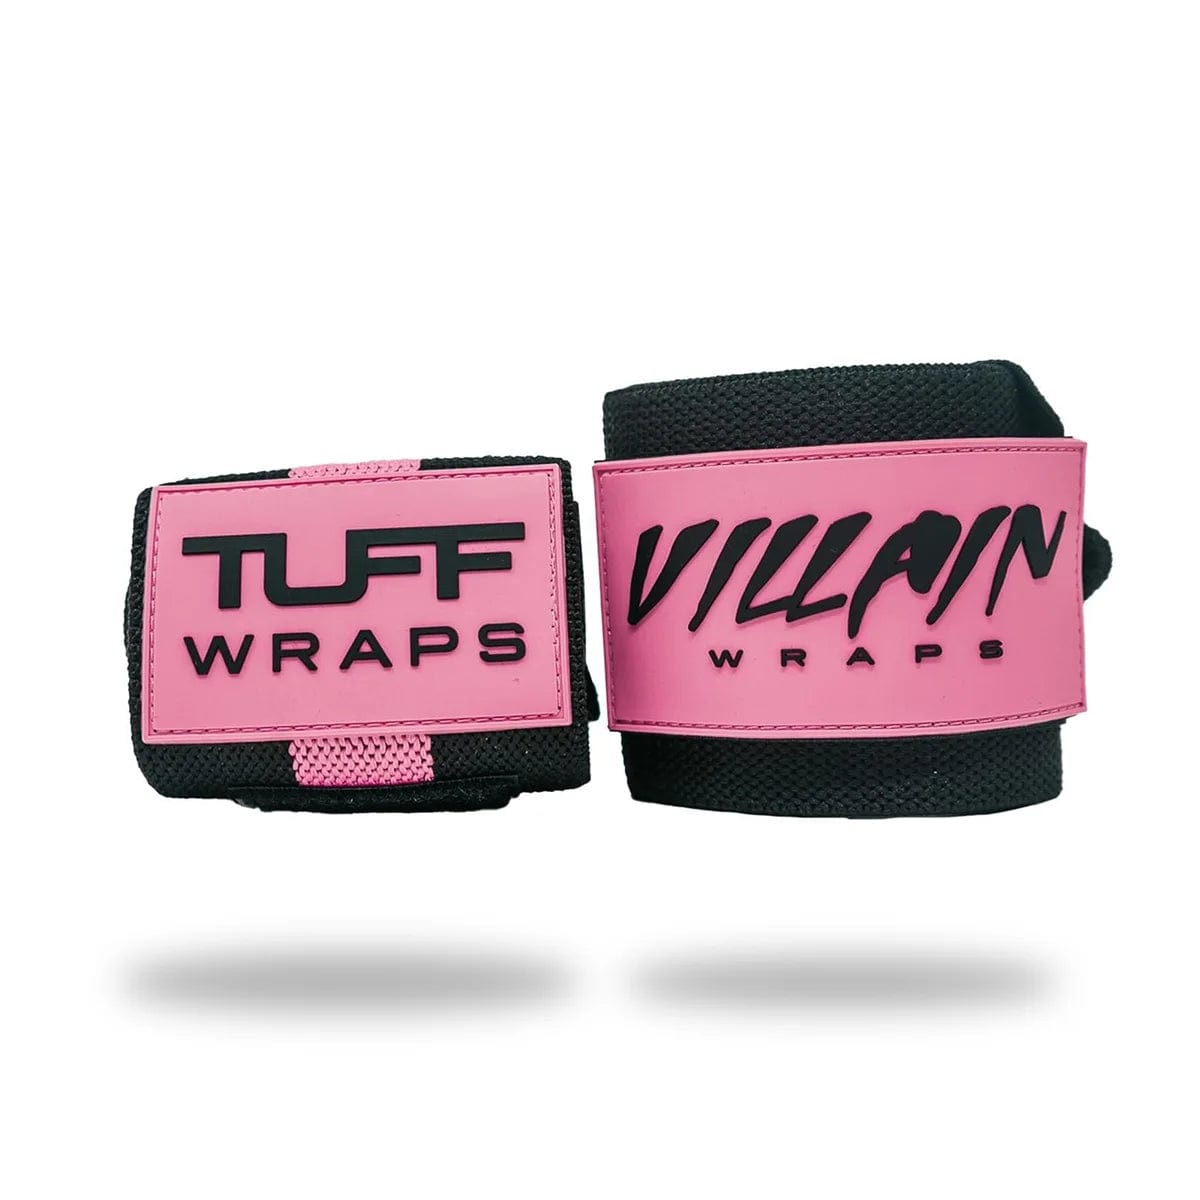 16" Villain Sidekick Wrist Wraps - Black & Pink - Breast Cancer TuffWraps.com